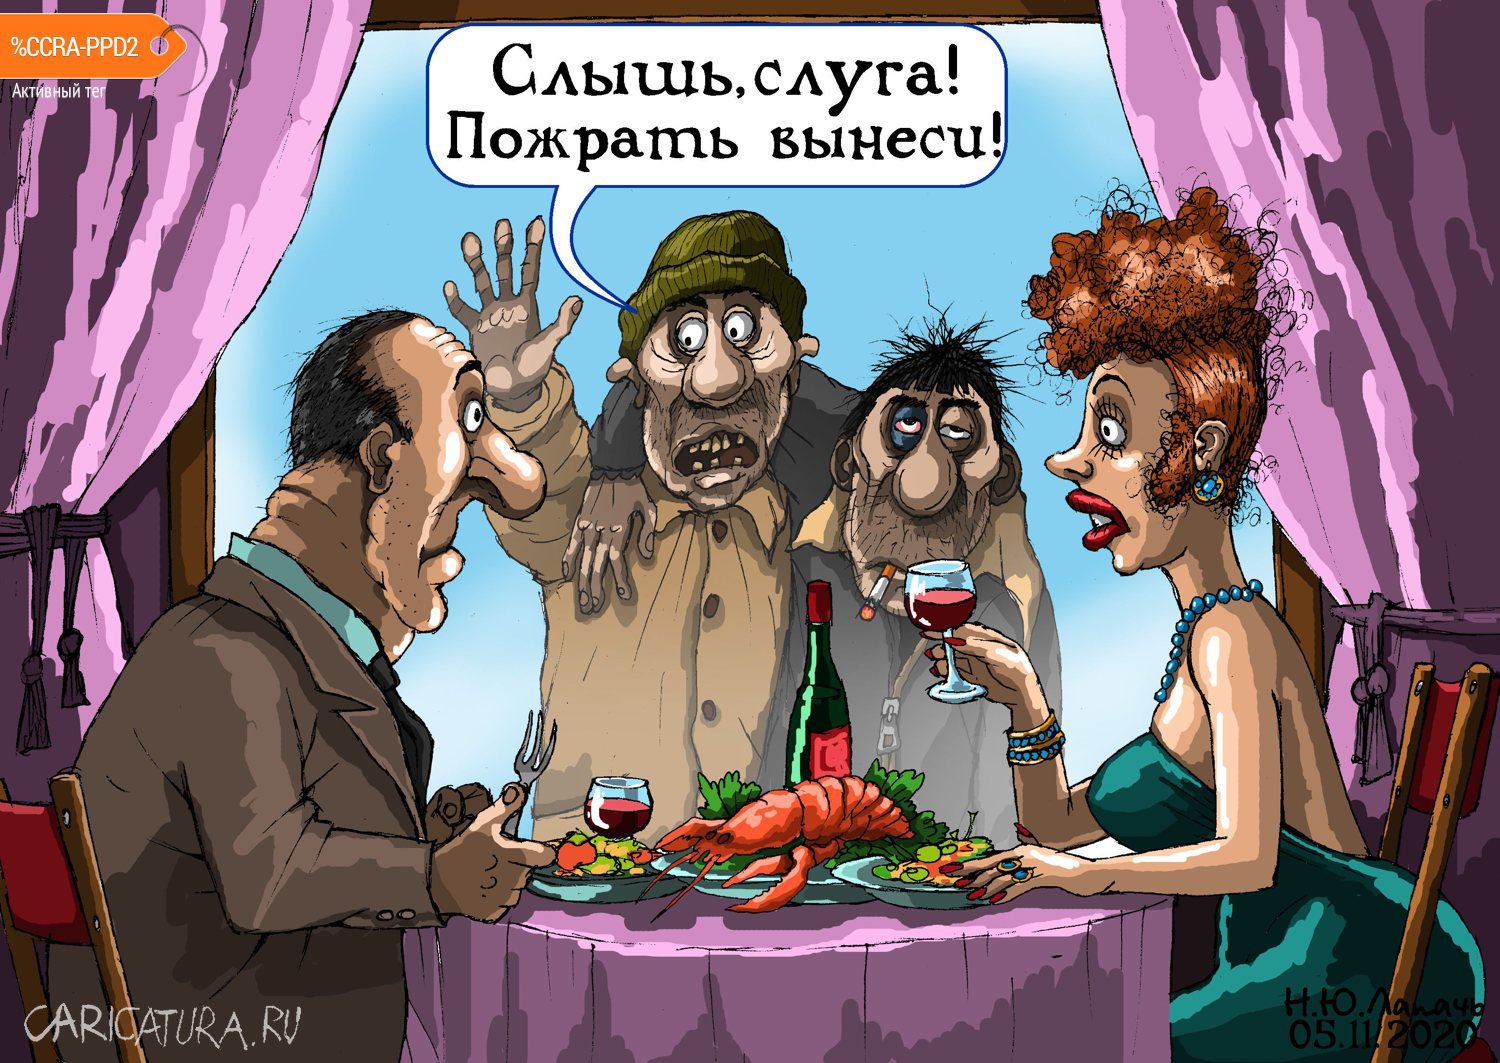 Карикатура "Прислуга народа", Теплый Телогрей